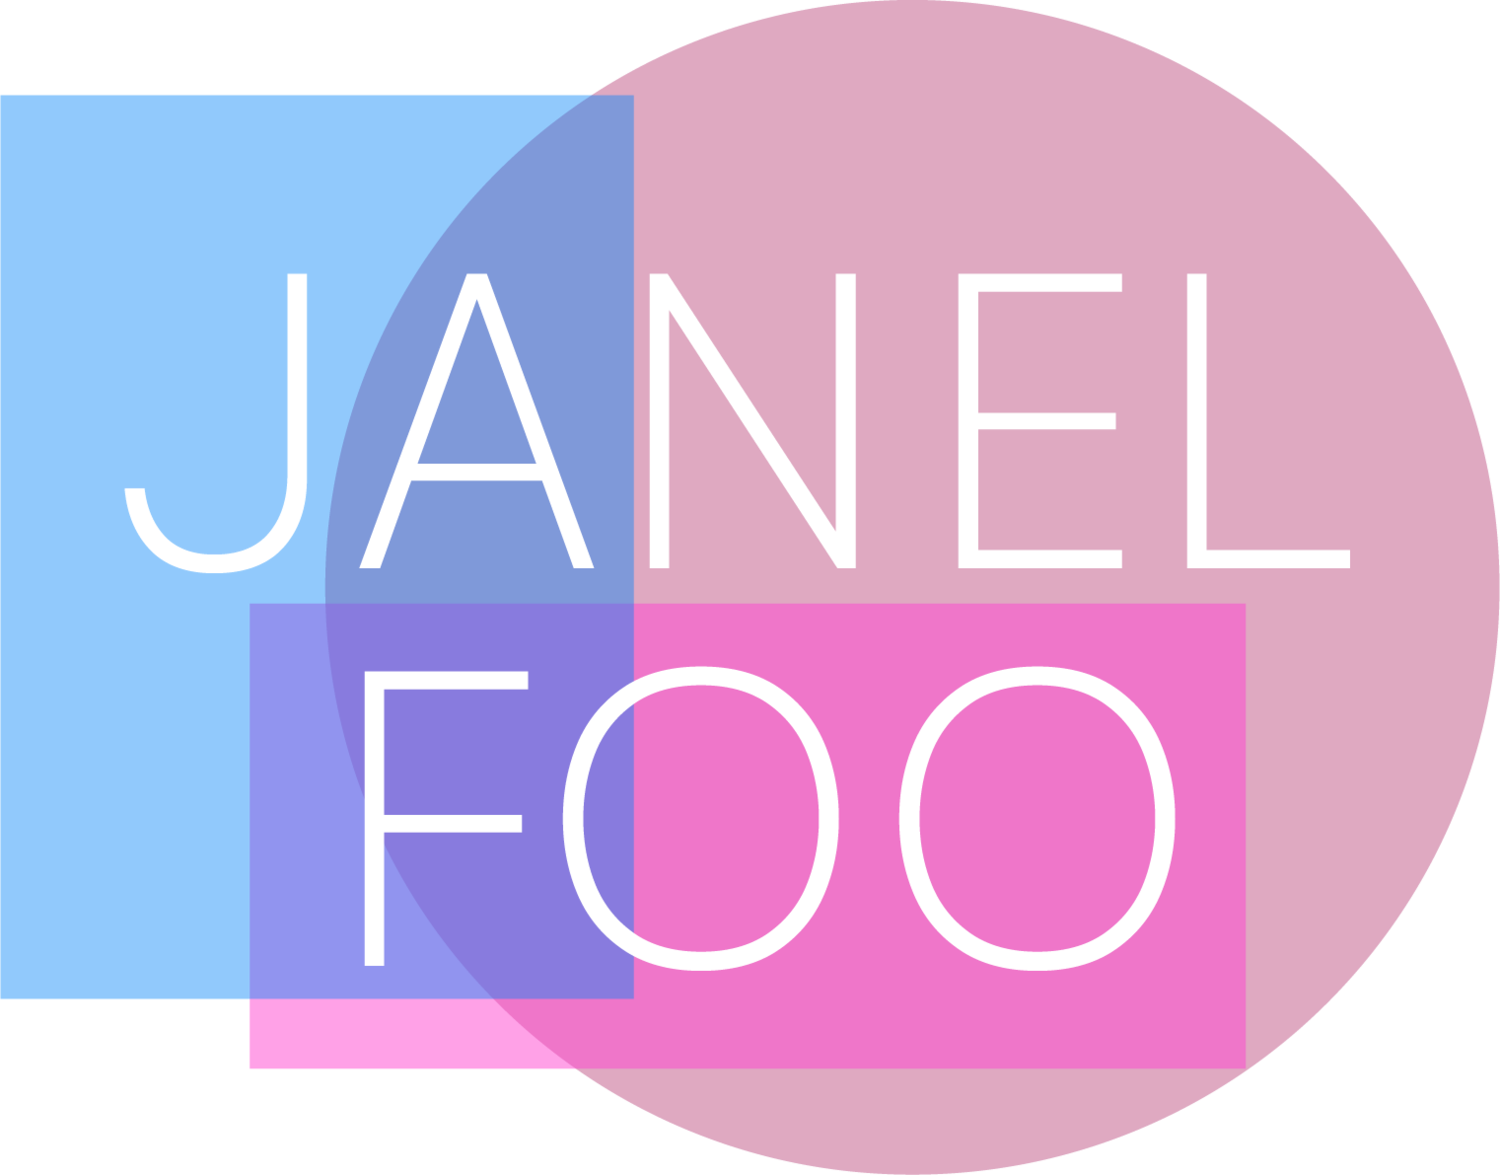 Janel Foo